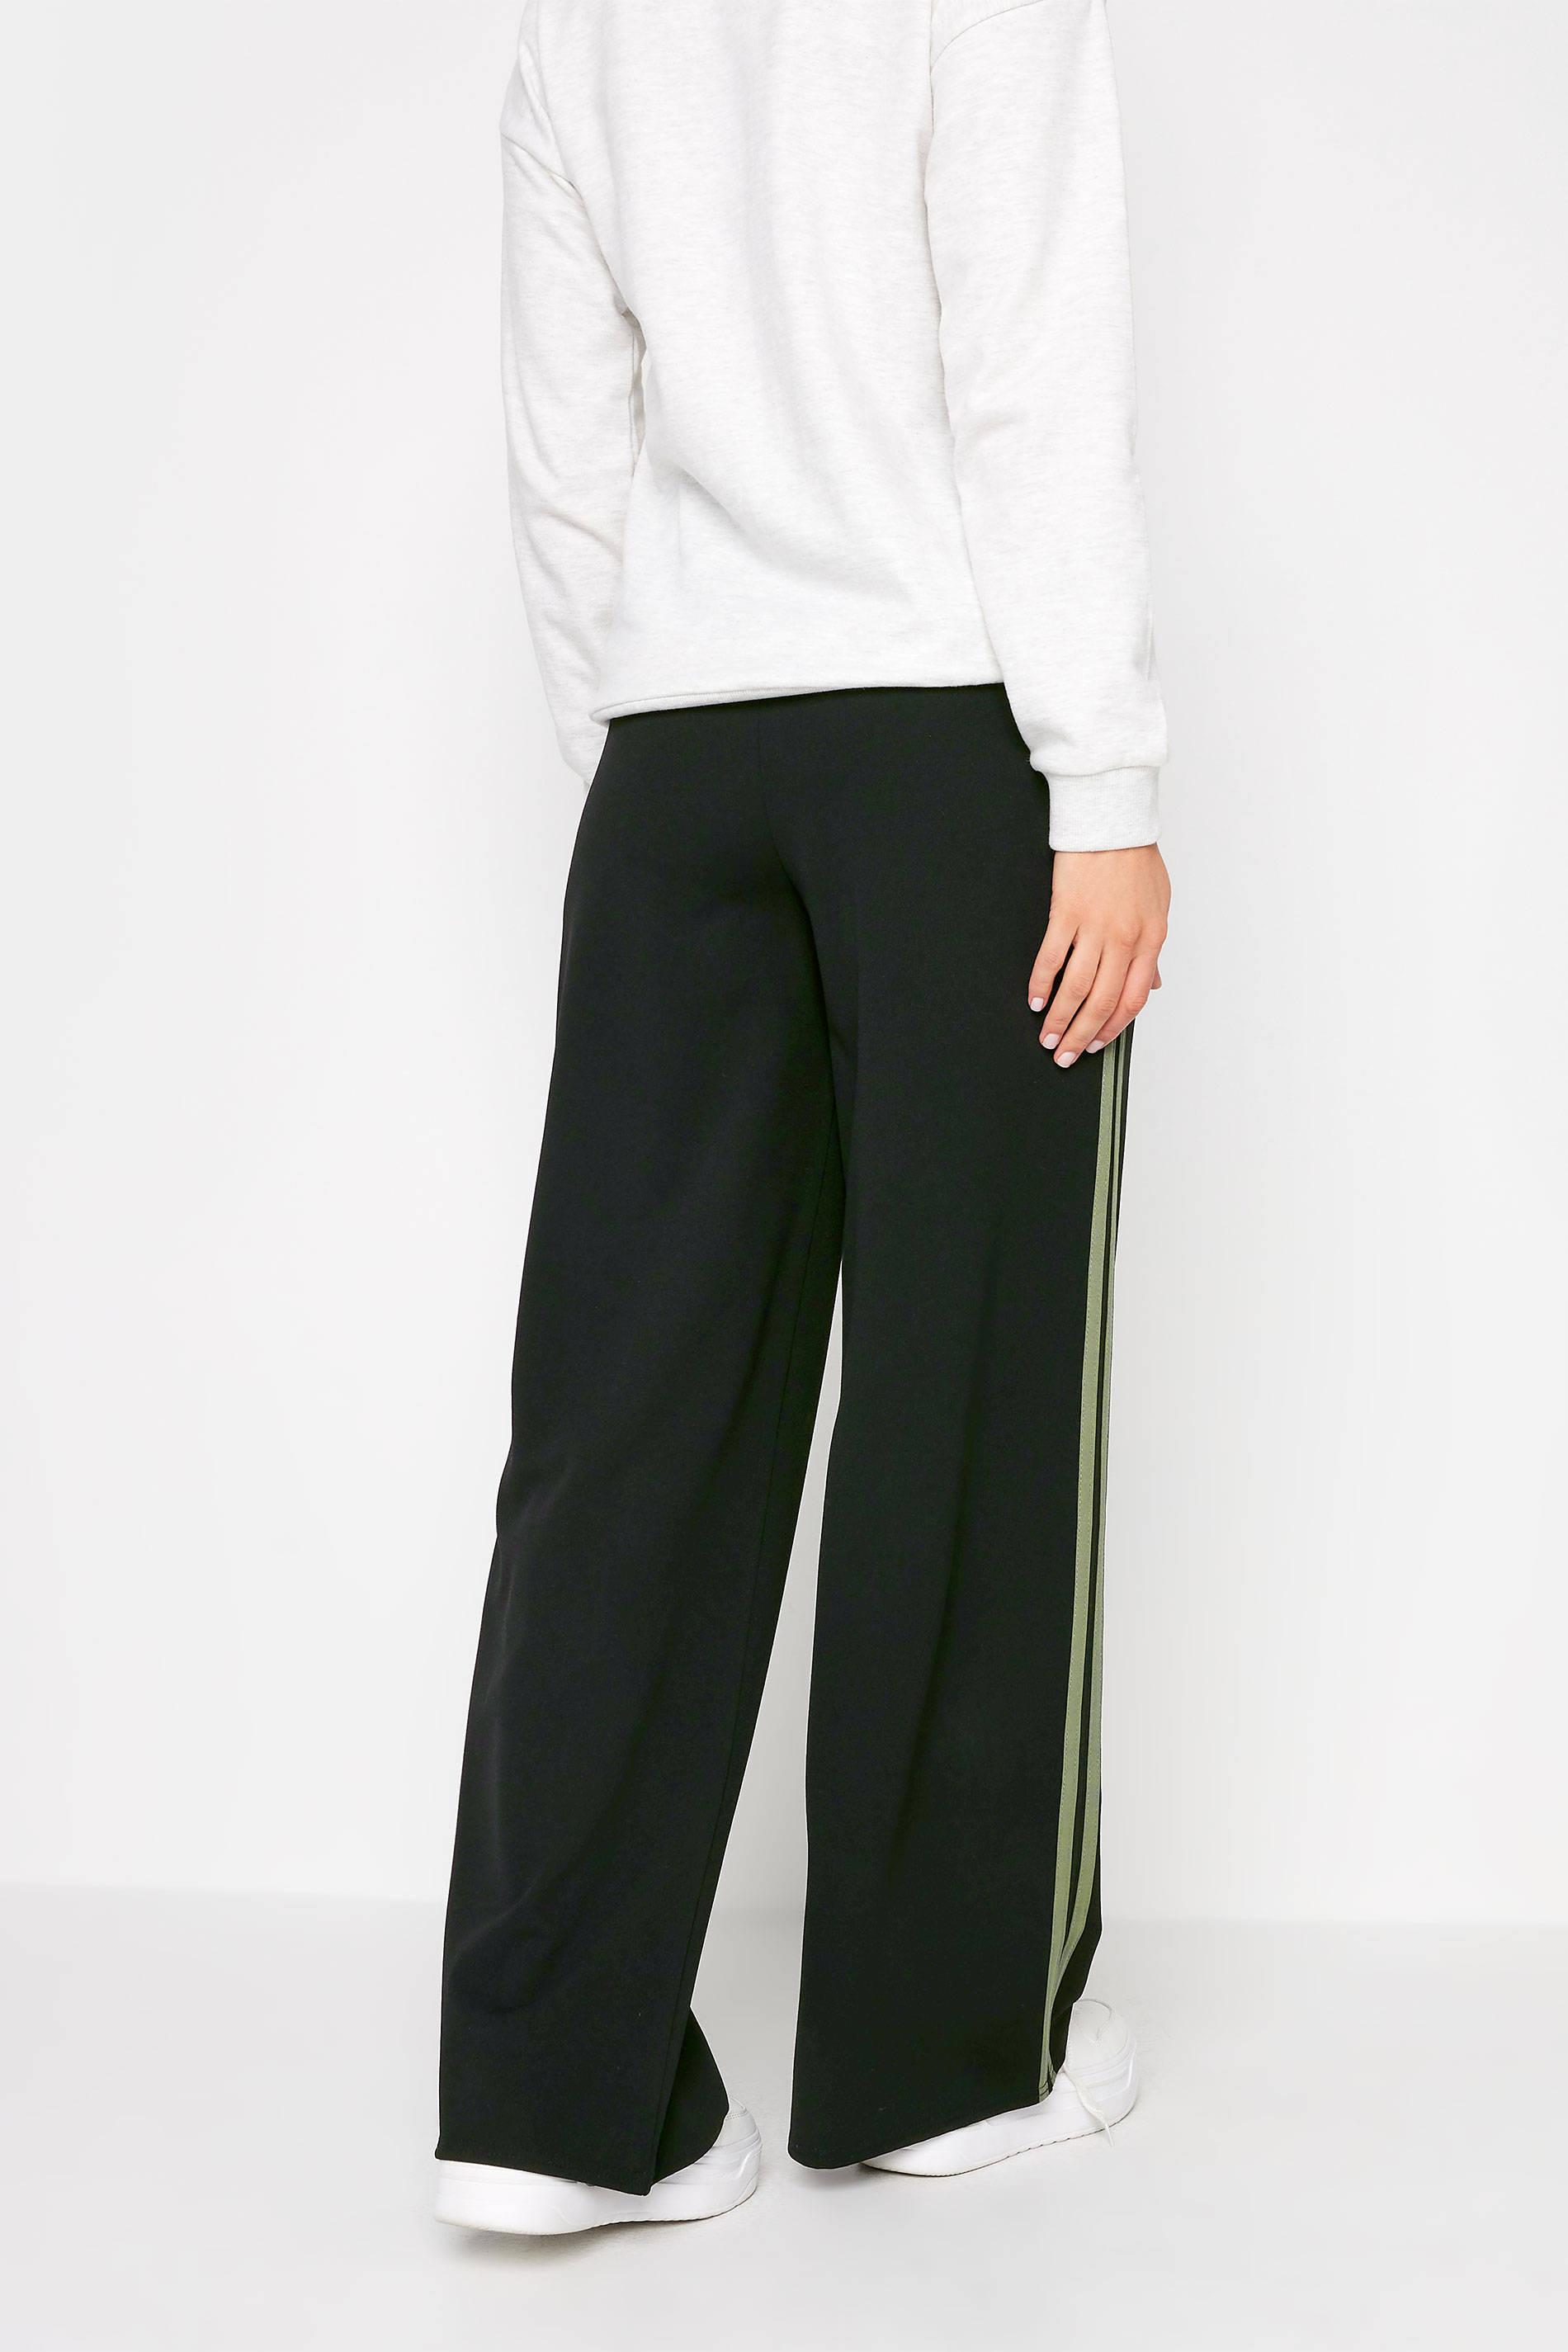 LTS Tall Black & Khaki Green Stripe Wide Leg Trousers | Long Tall Sally  3